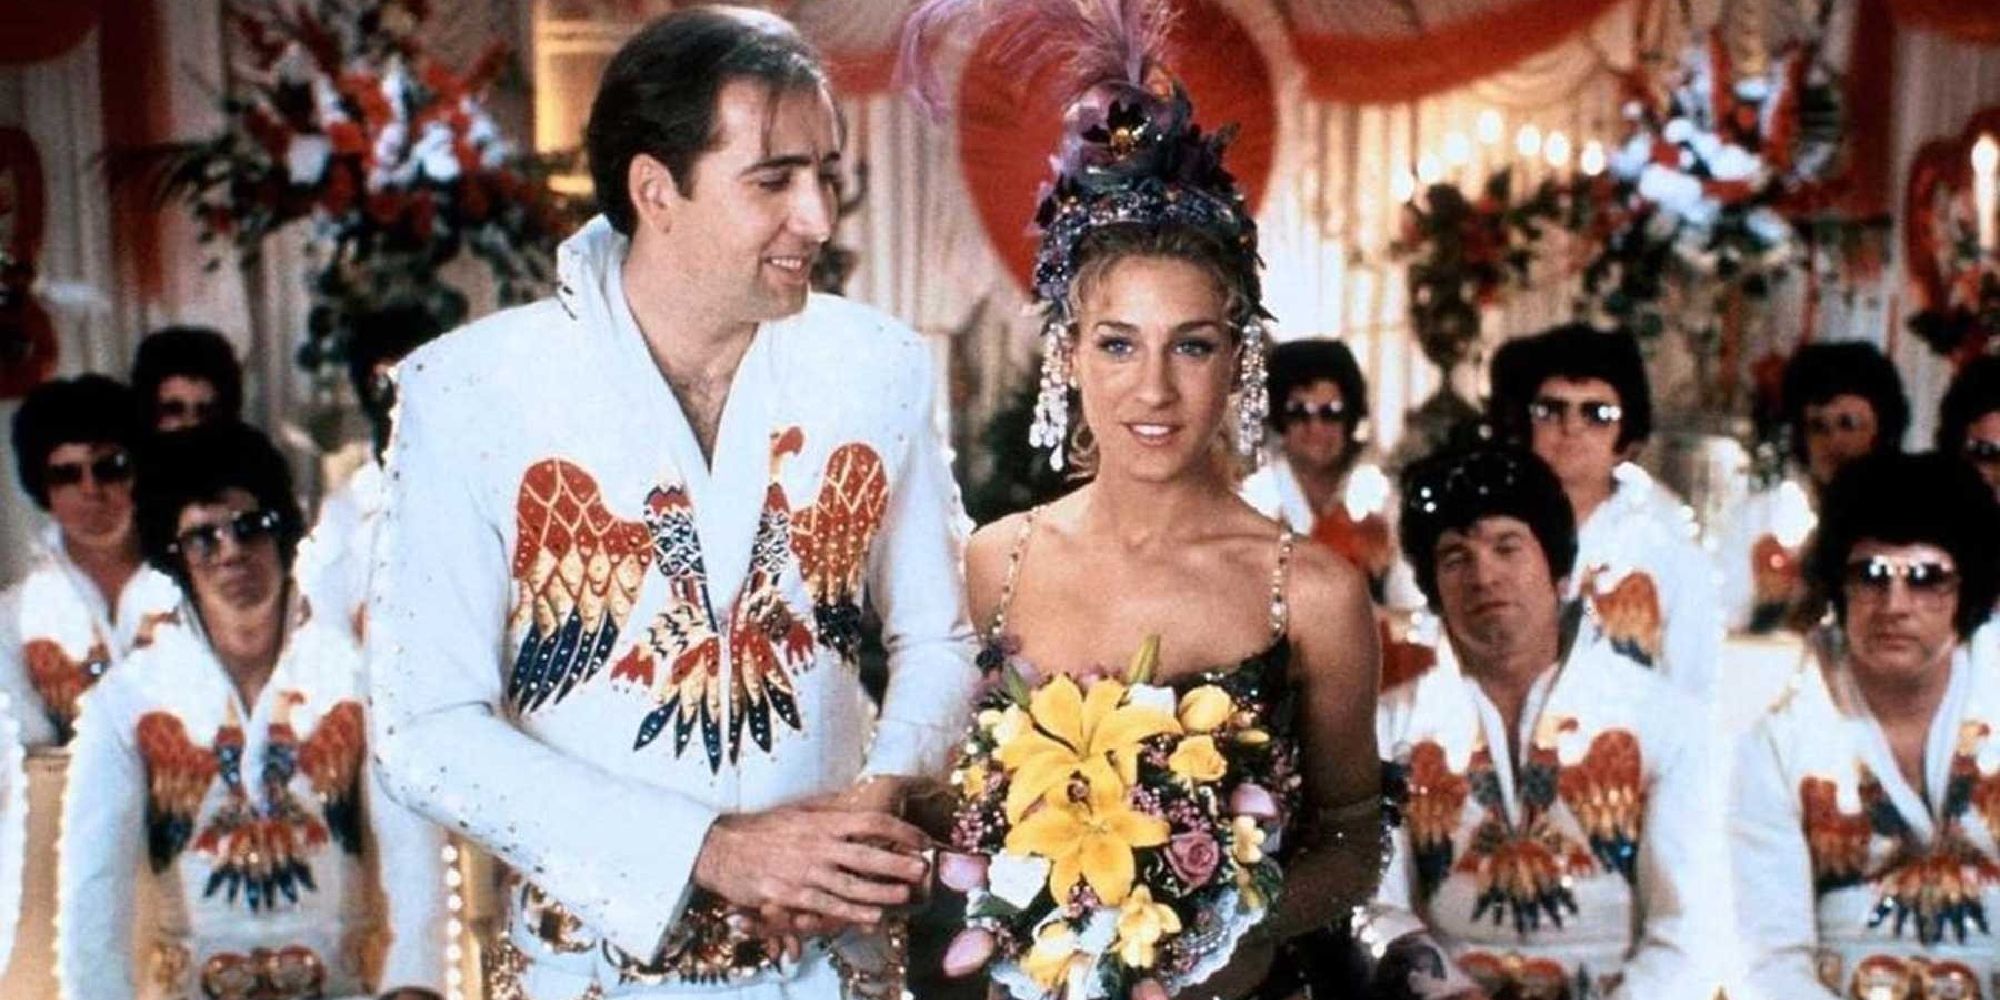 Nicolas Care and Sarah Jessica Parker in Honeymoon in Vegas (1992)